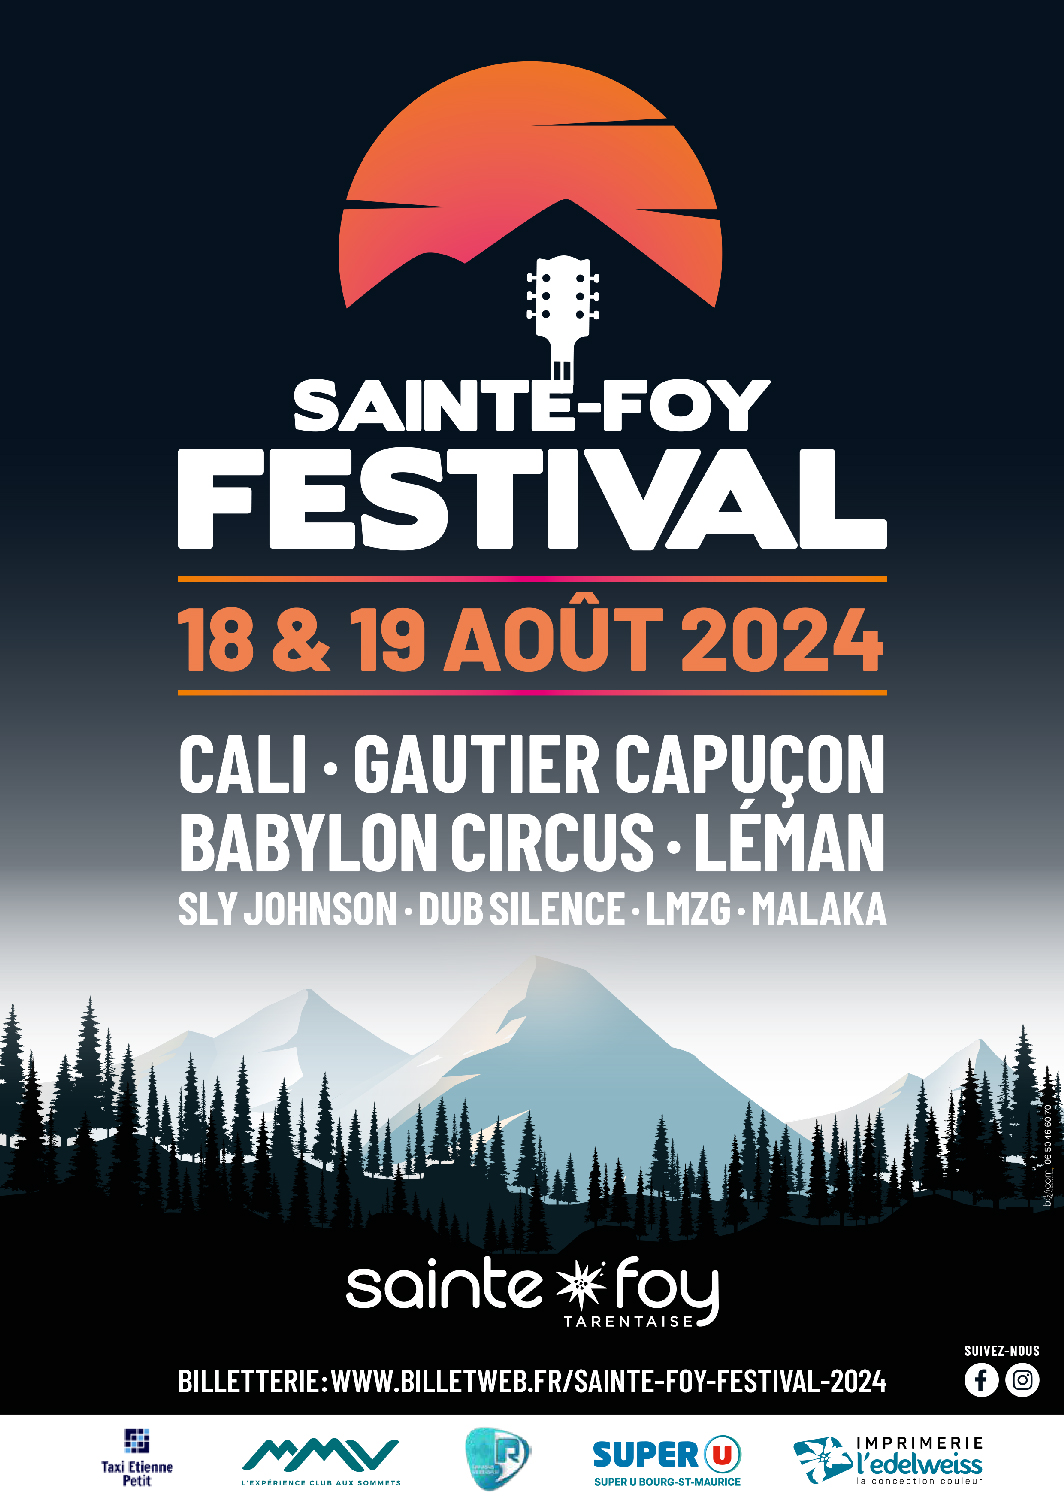 Sainte-Foy Festival